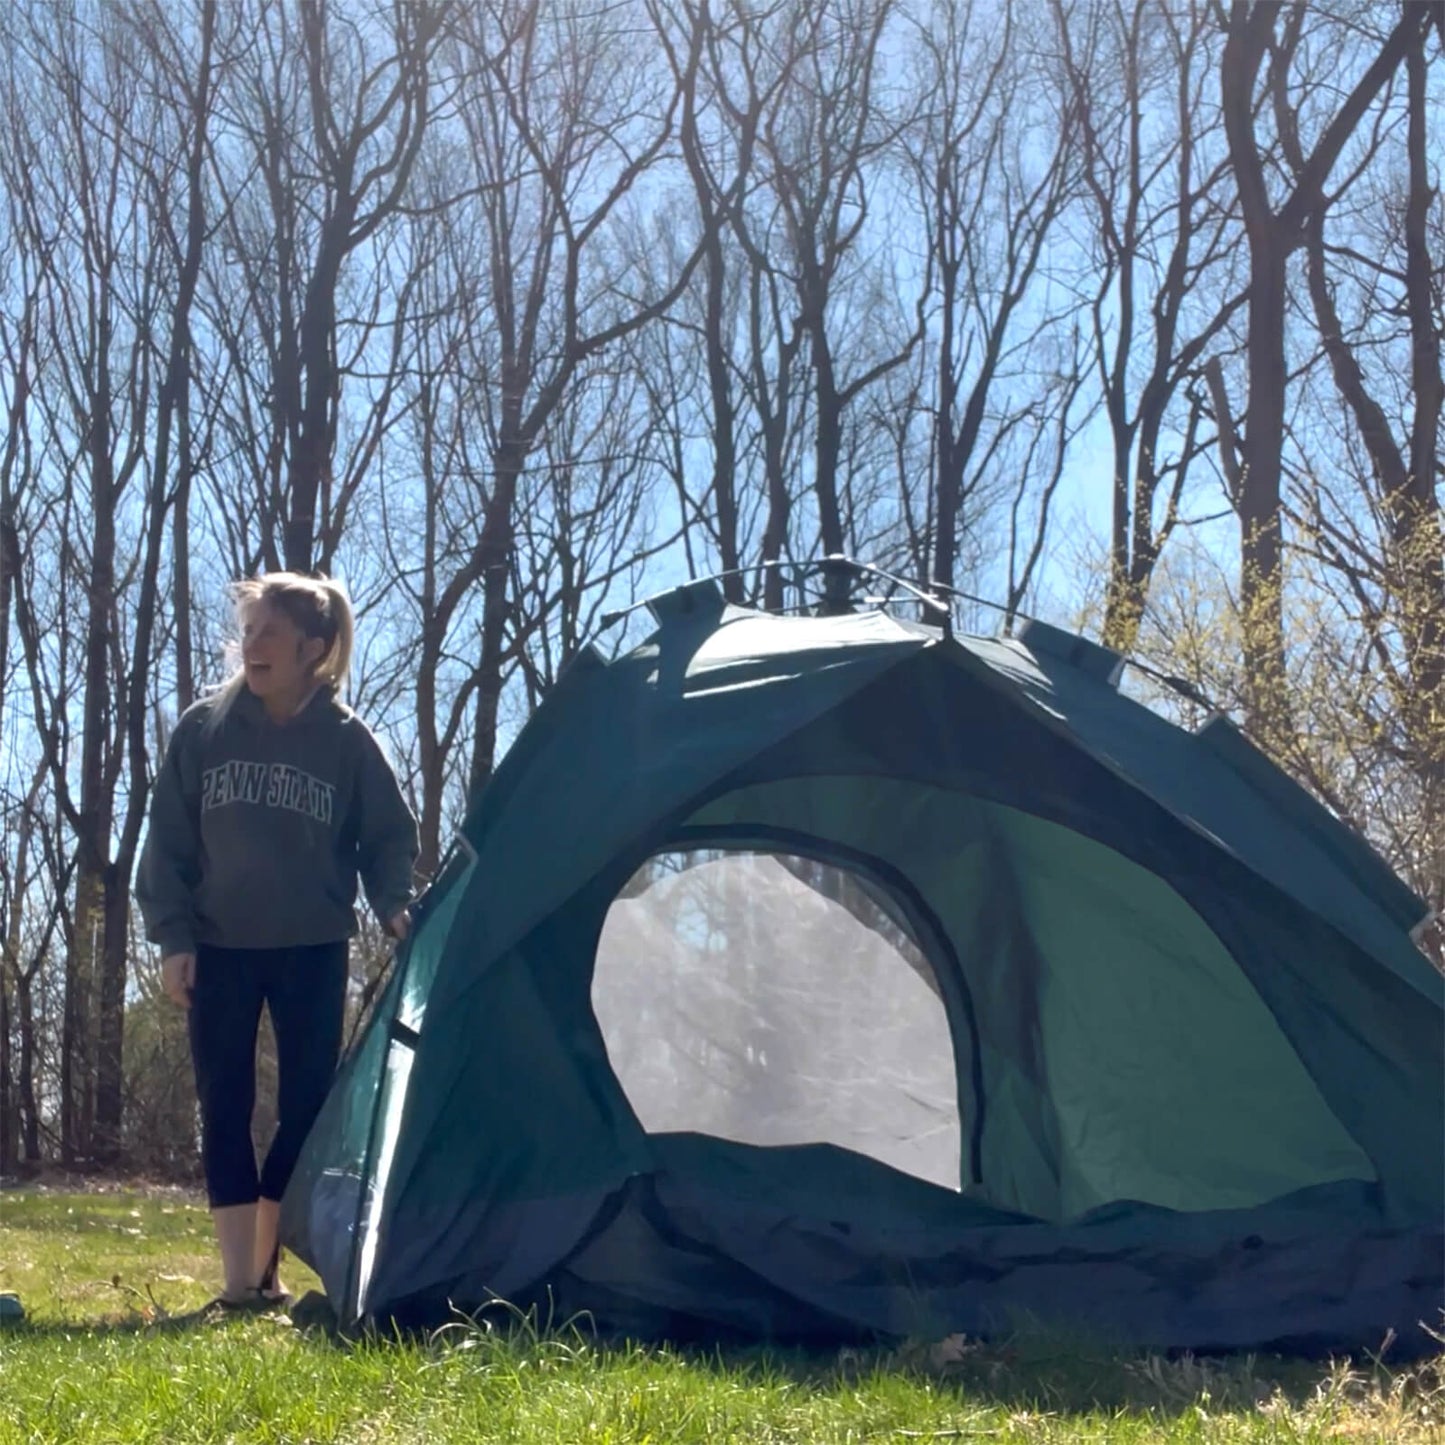 Large-Sized 3 Secs Tent (For 2-3 Person, AU)